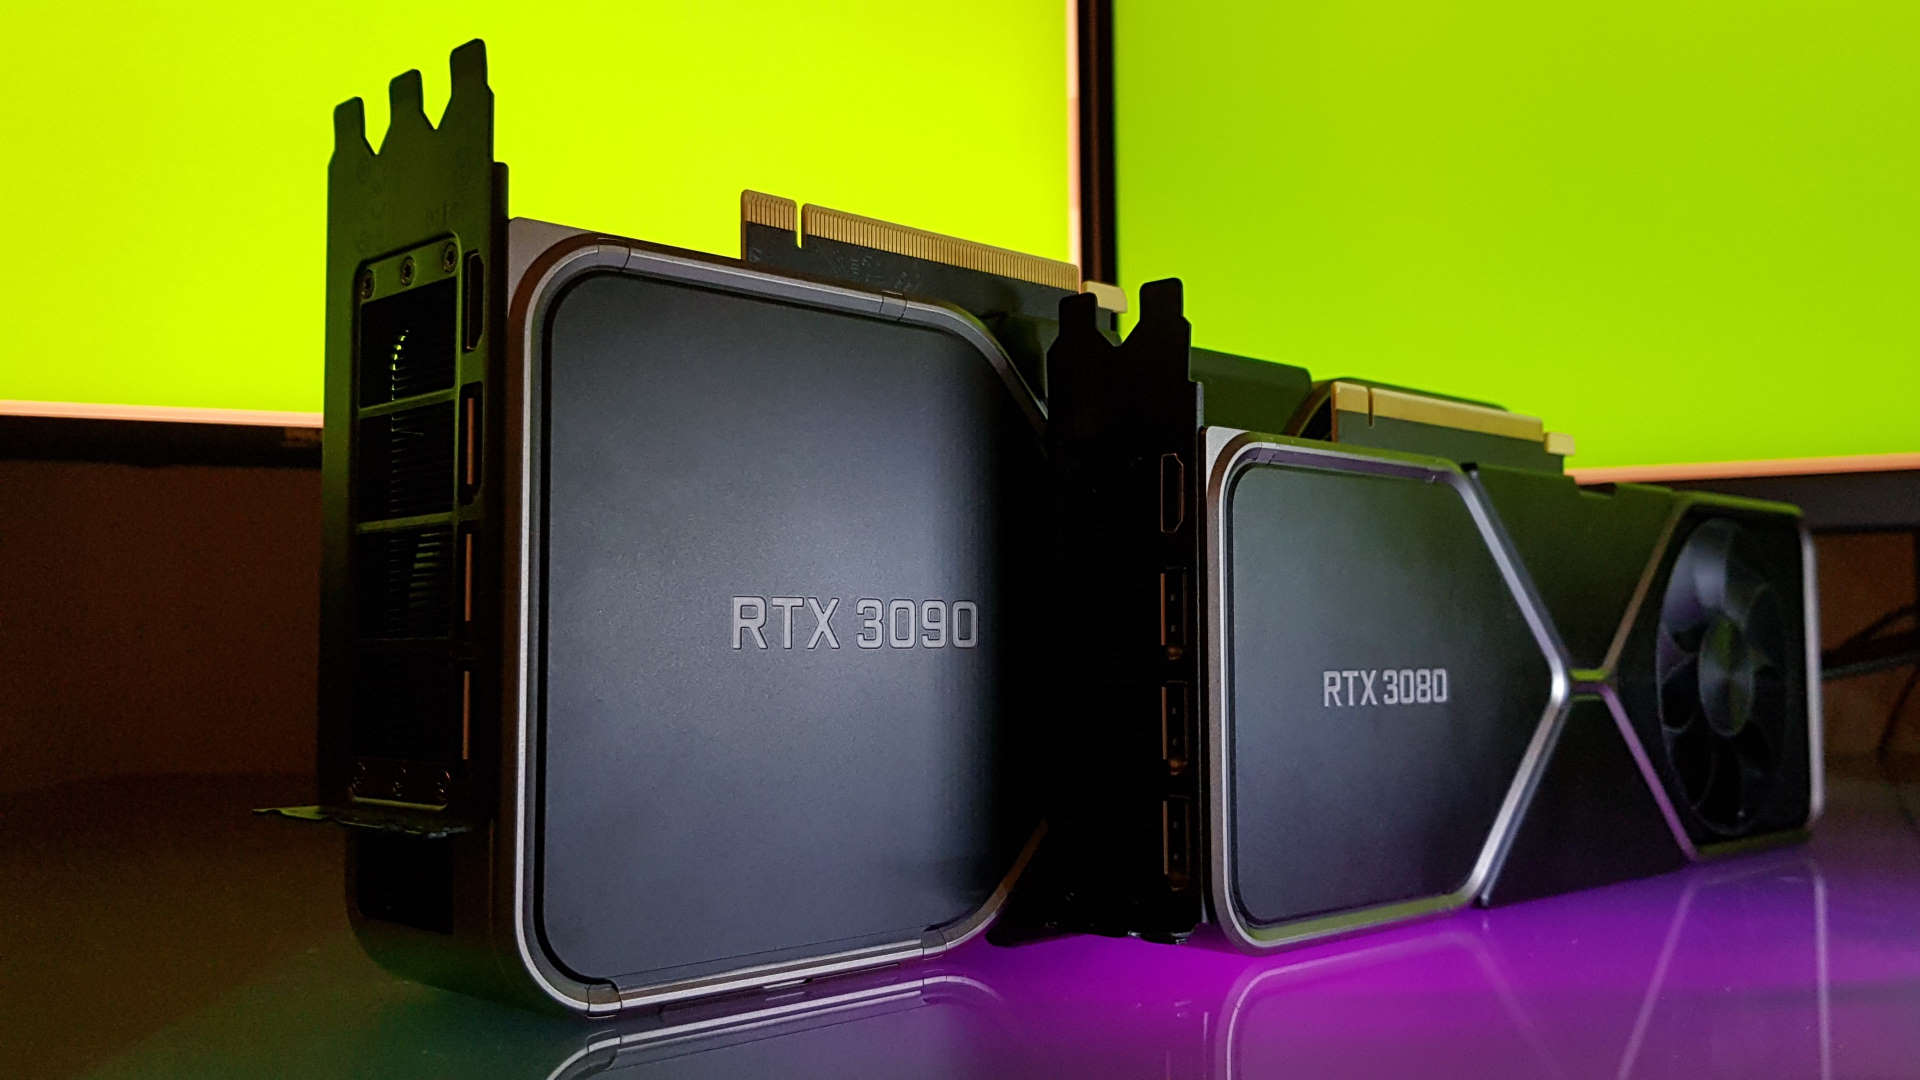 Nvidia RTX 3080 and RTX 3090